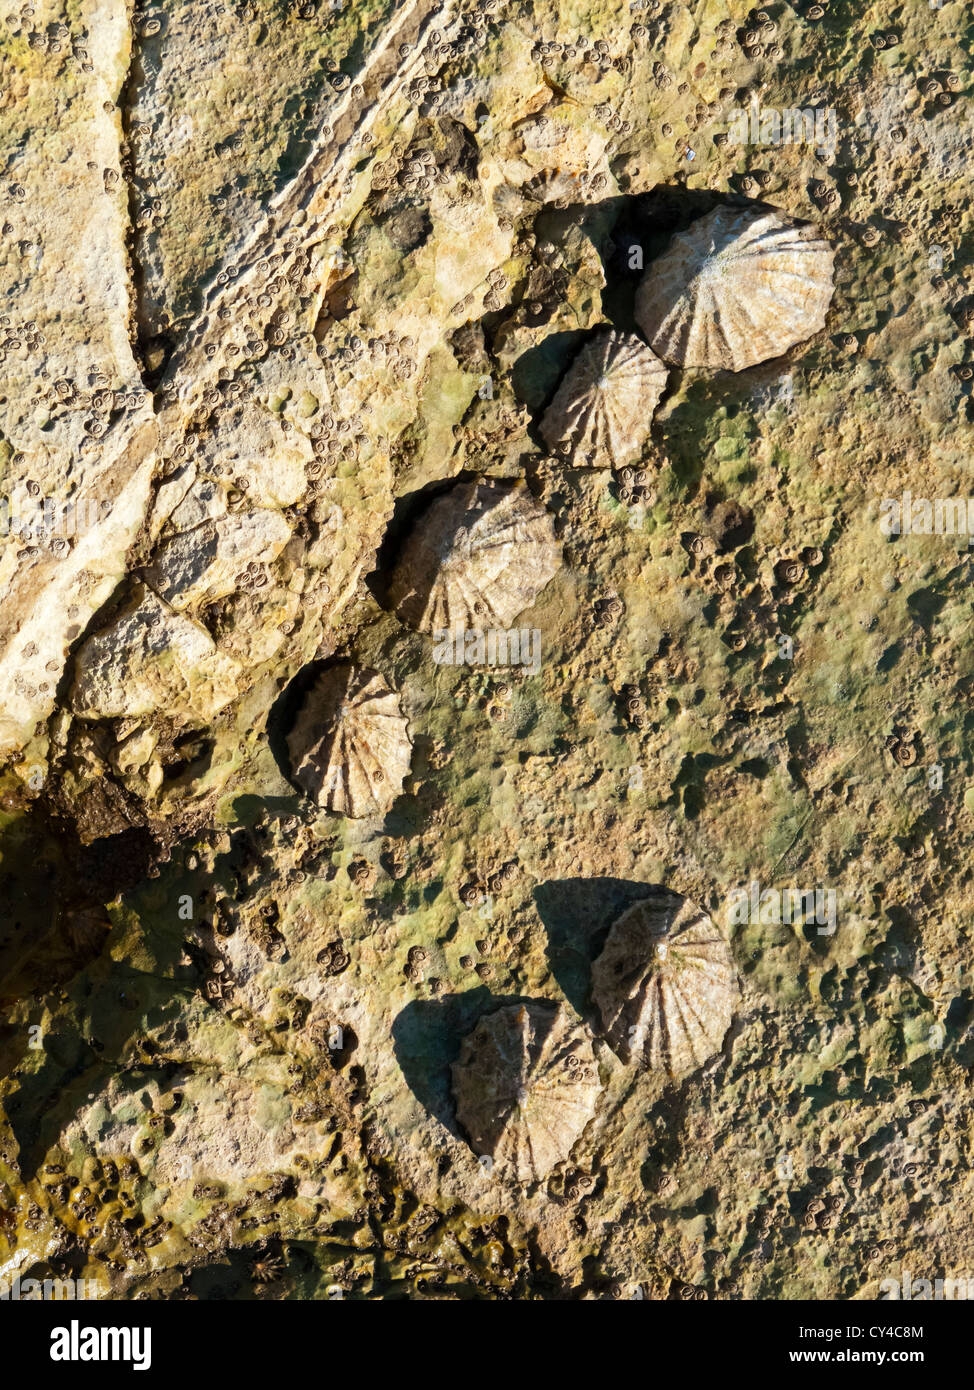 Limpet común europeo Patella vulgata creciendo sobre rocas en la costa de Yorkshire, Inglaterra Foto de stock